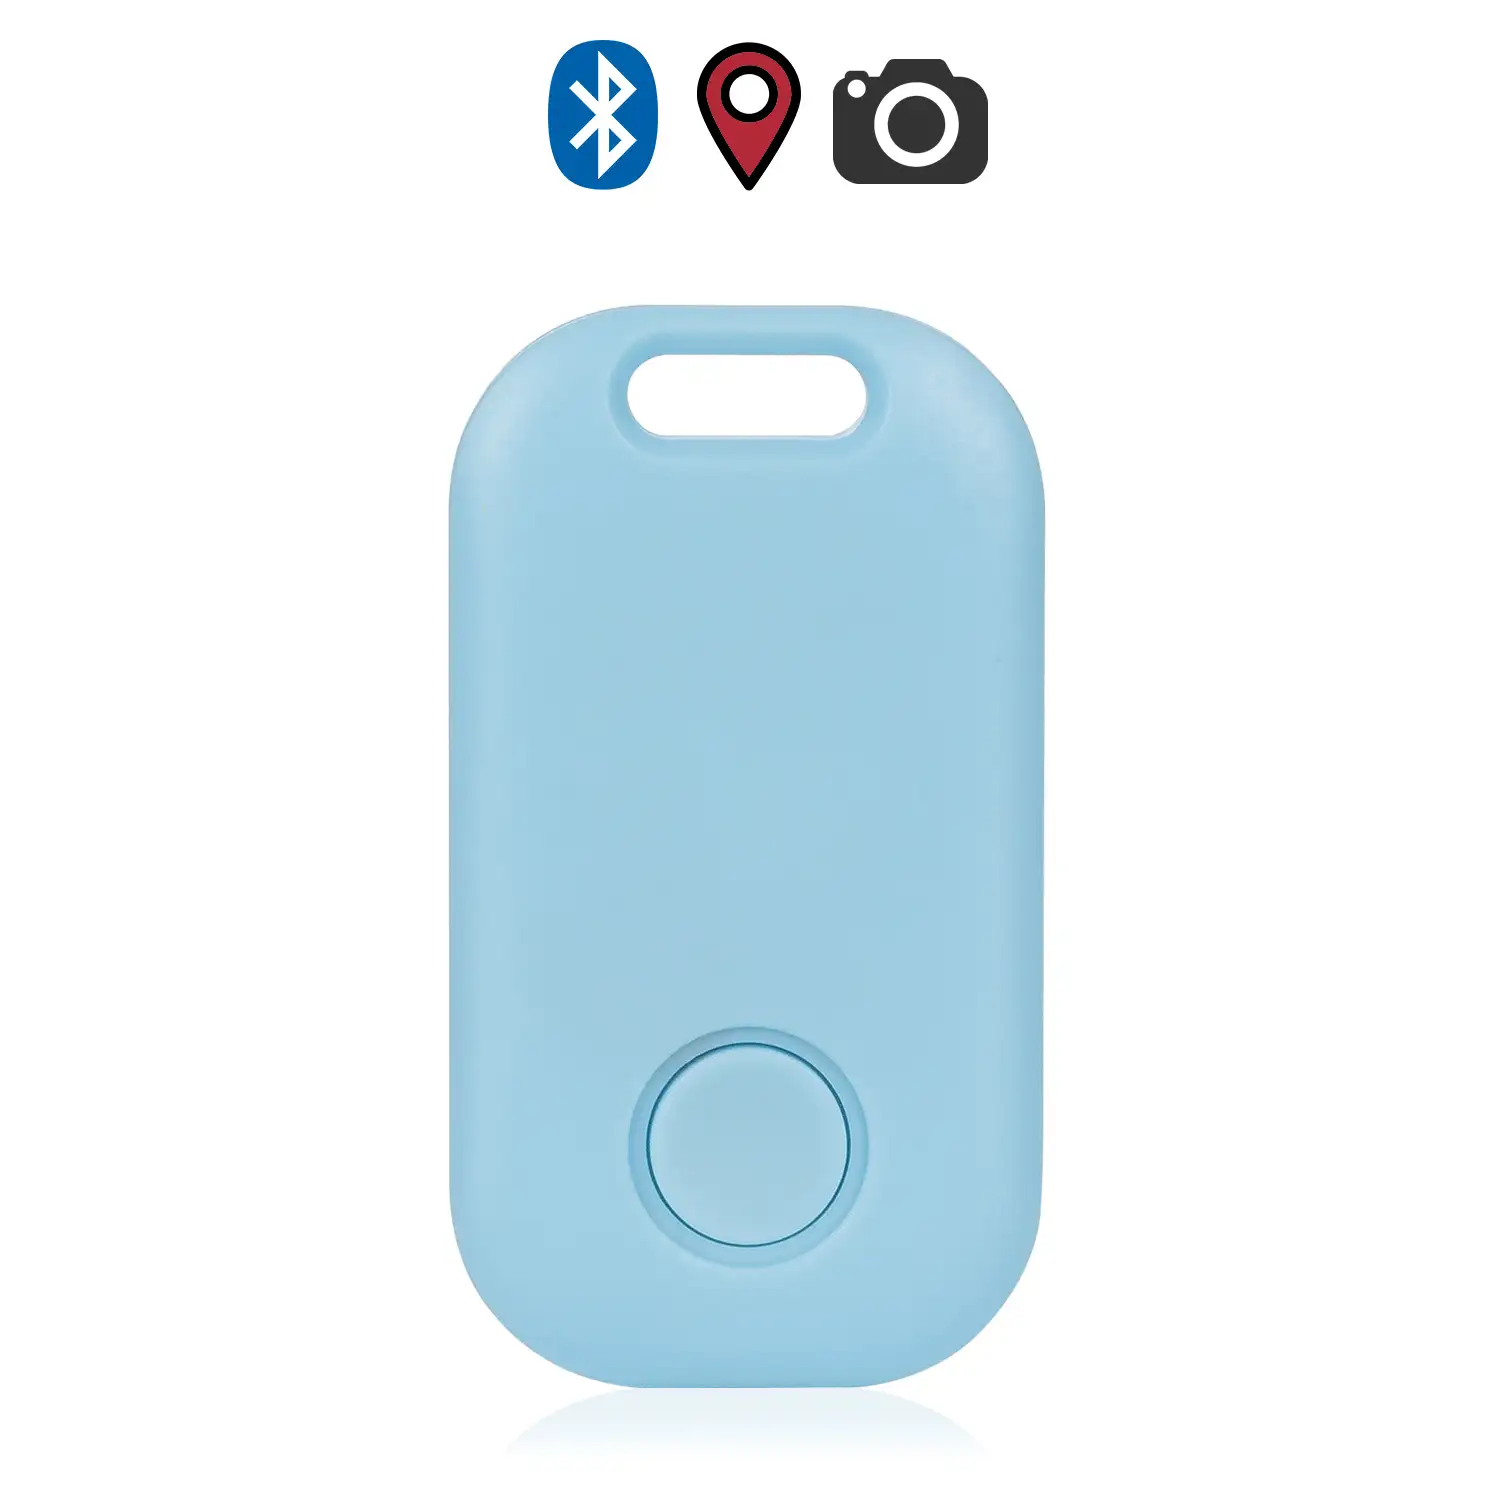 Llavero localizador rectangular Bluetooth 4.0 multifunción, con indicador GPS de última localización. Para mascotas, llaves, maletas, etc.